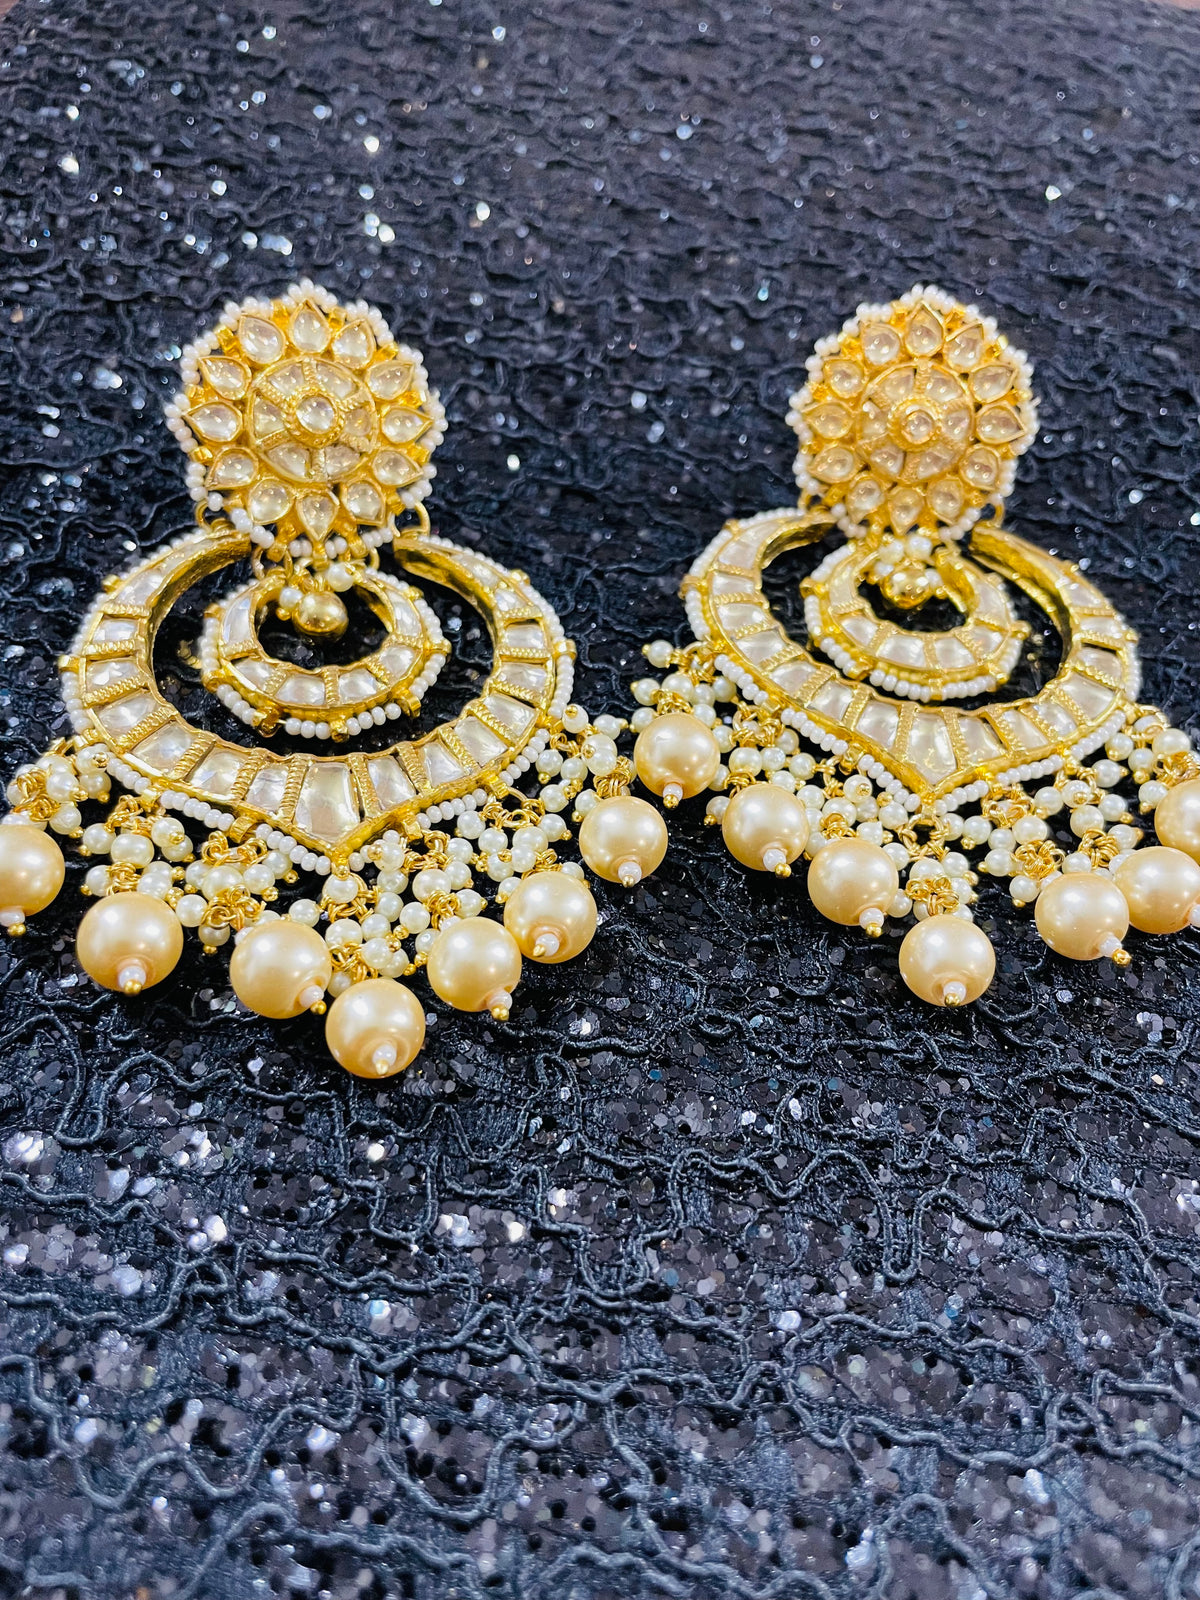 Stone Encrusted 22KT Gold Chandbali Earrings - Buy Now at Bhima Online!